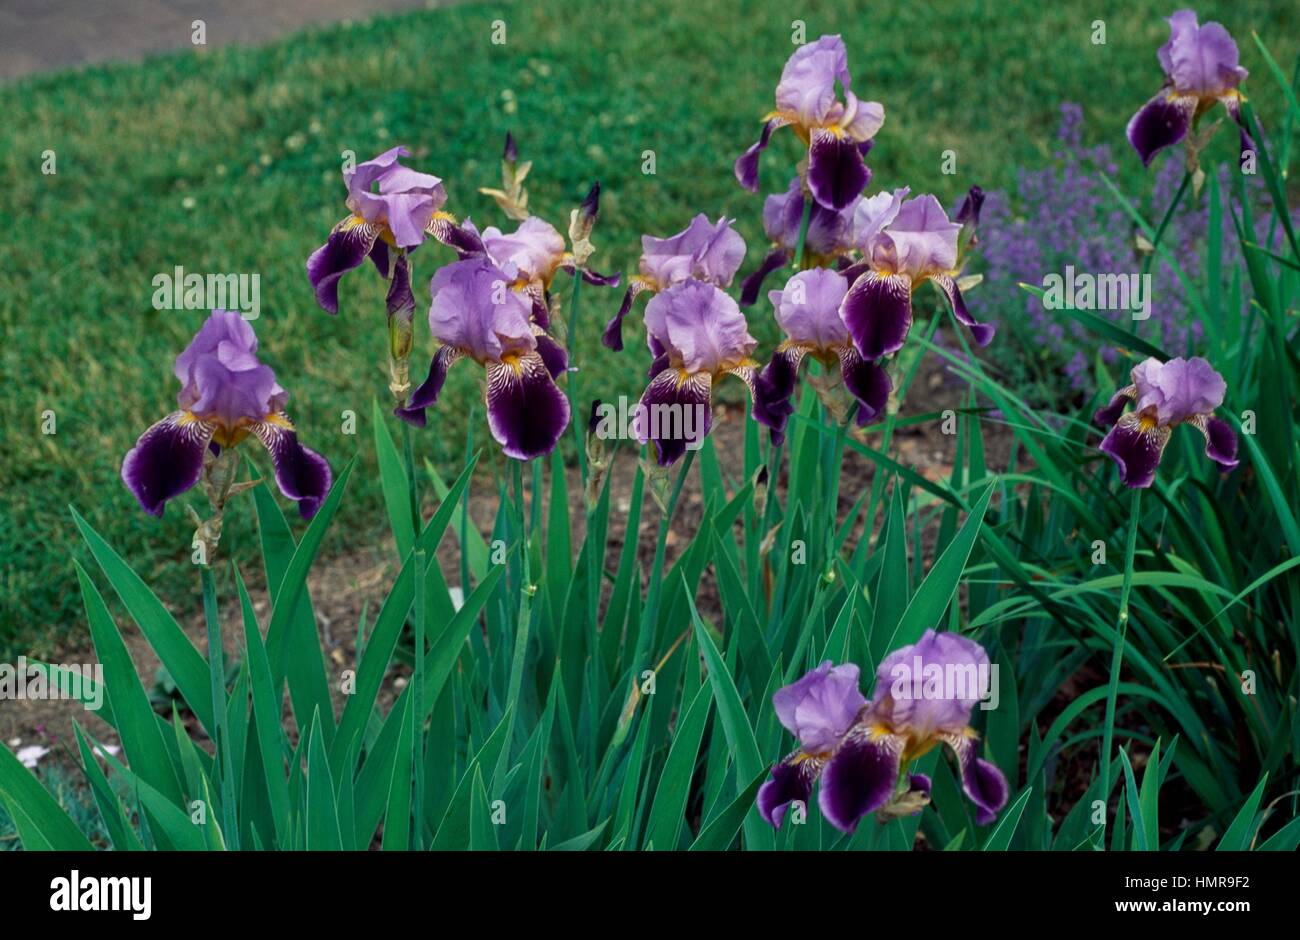 Barbuto (Iris Iris Beato Angelico), Iridaceae. Foto Stock